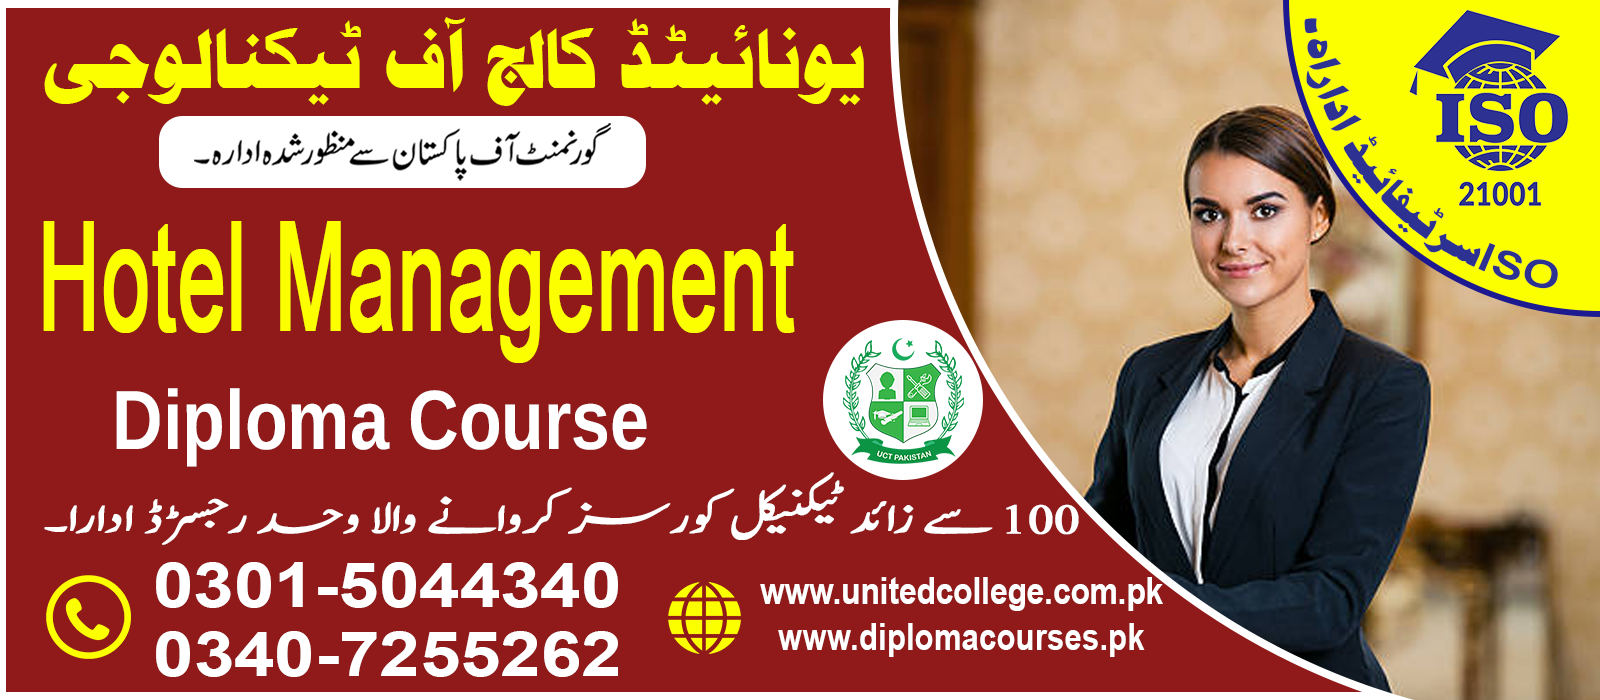 Hotel Management Course